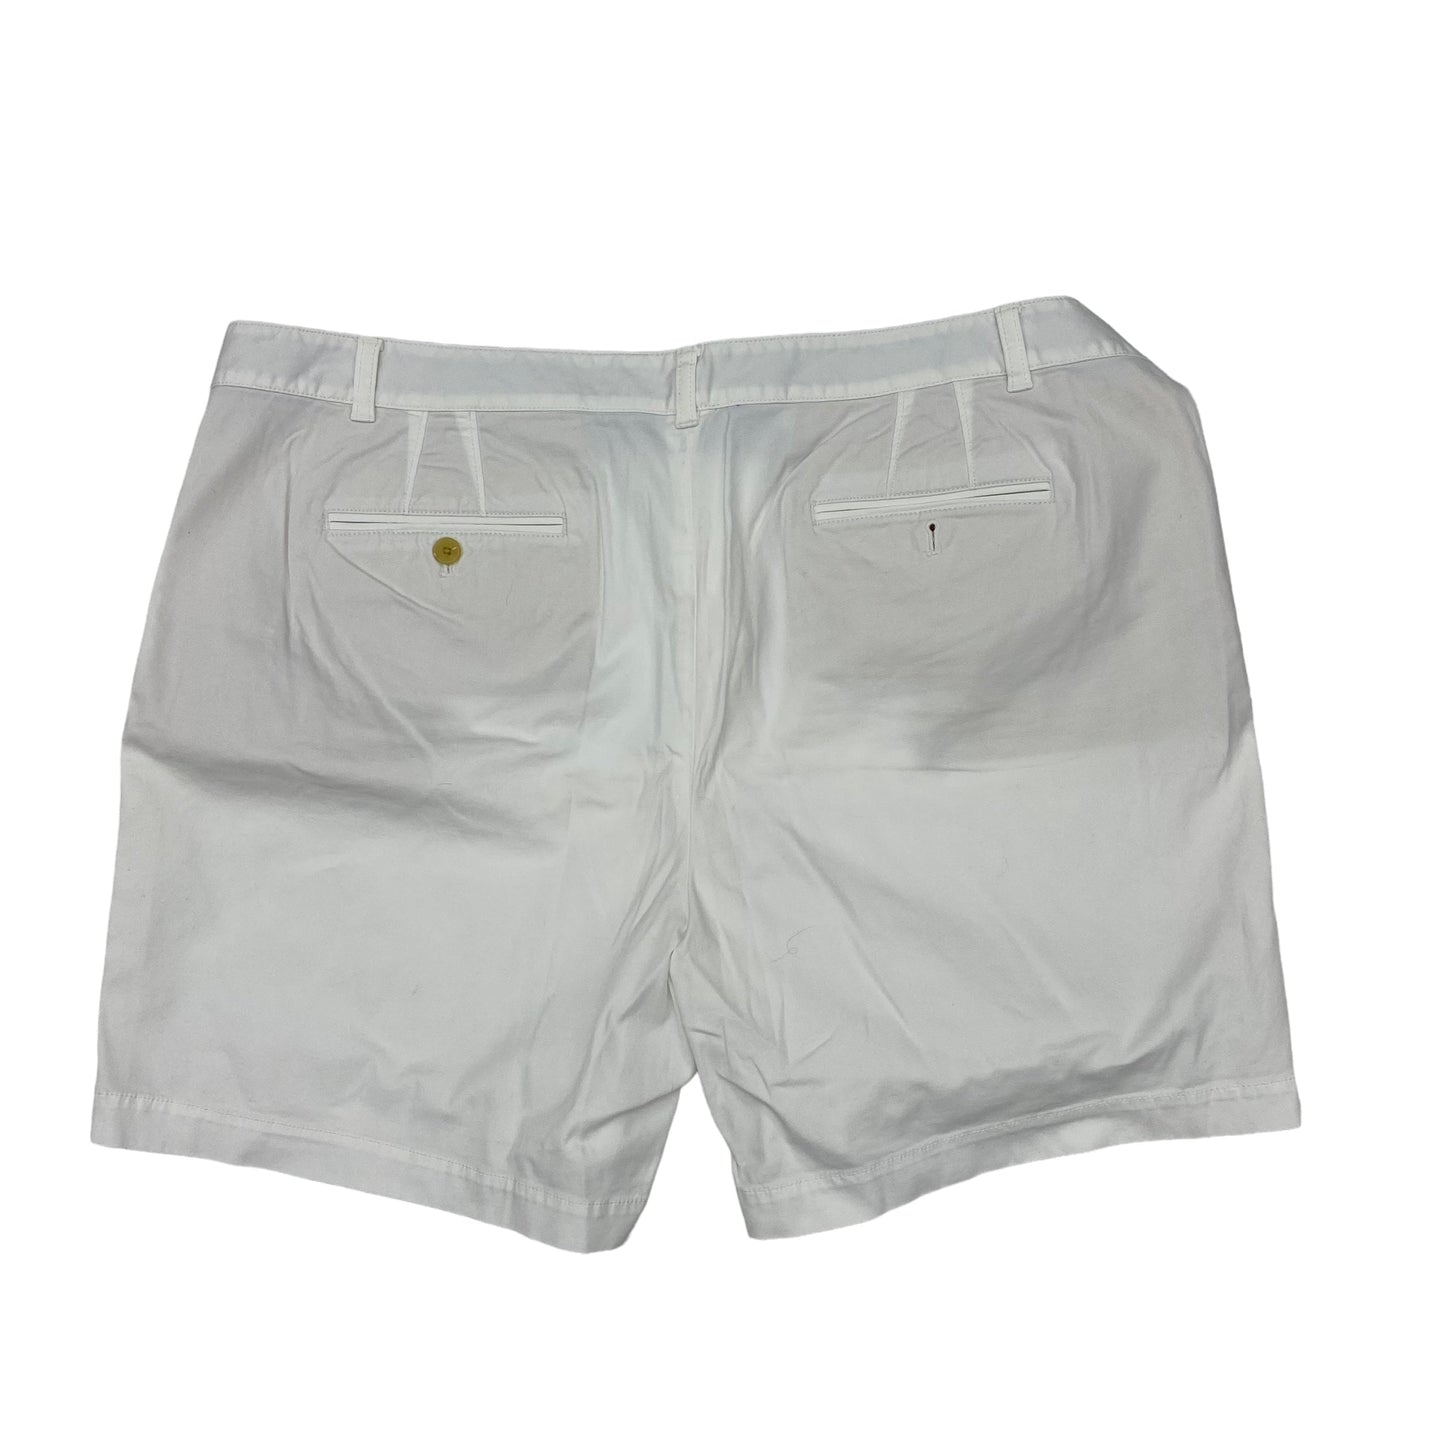 Shorts By Talbots  Size: 20